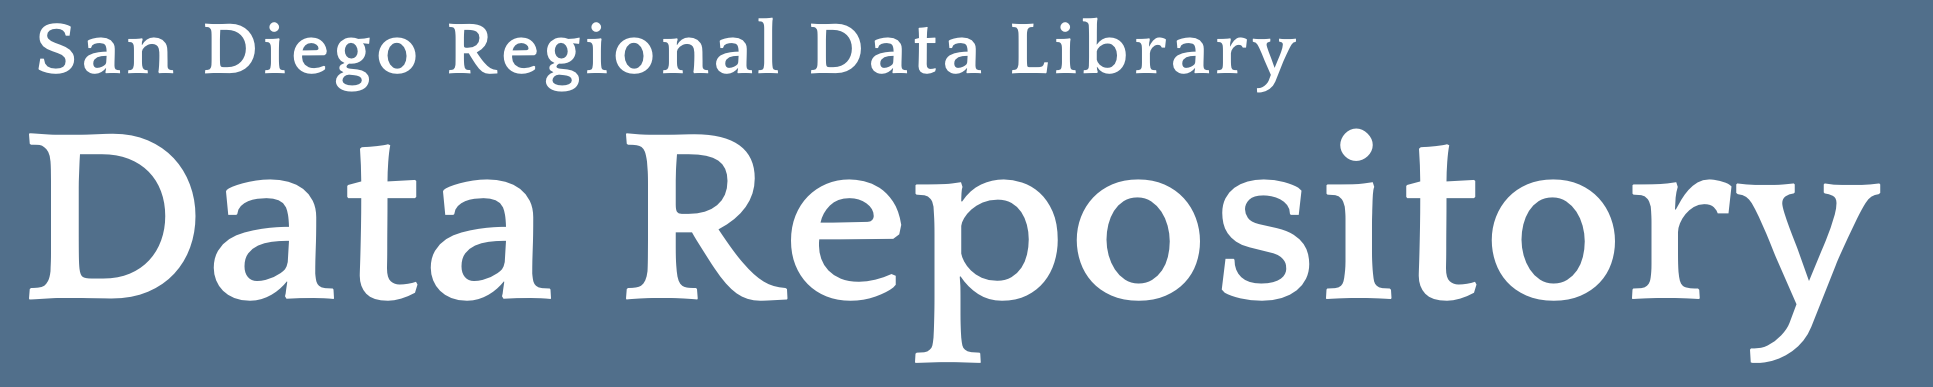 SDRDL Data Repository